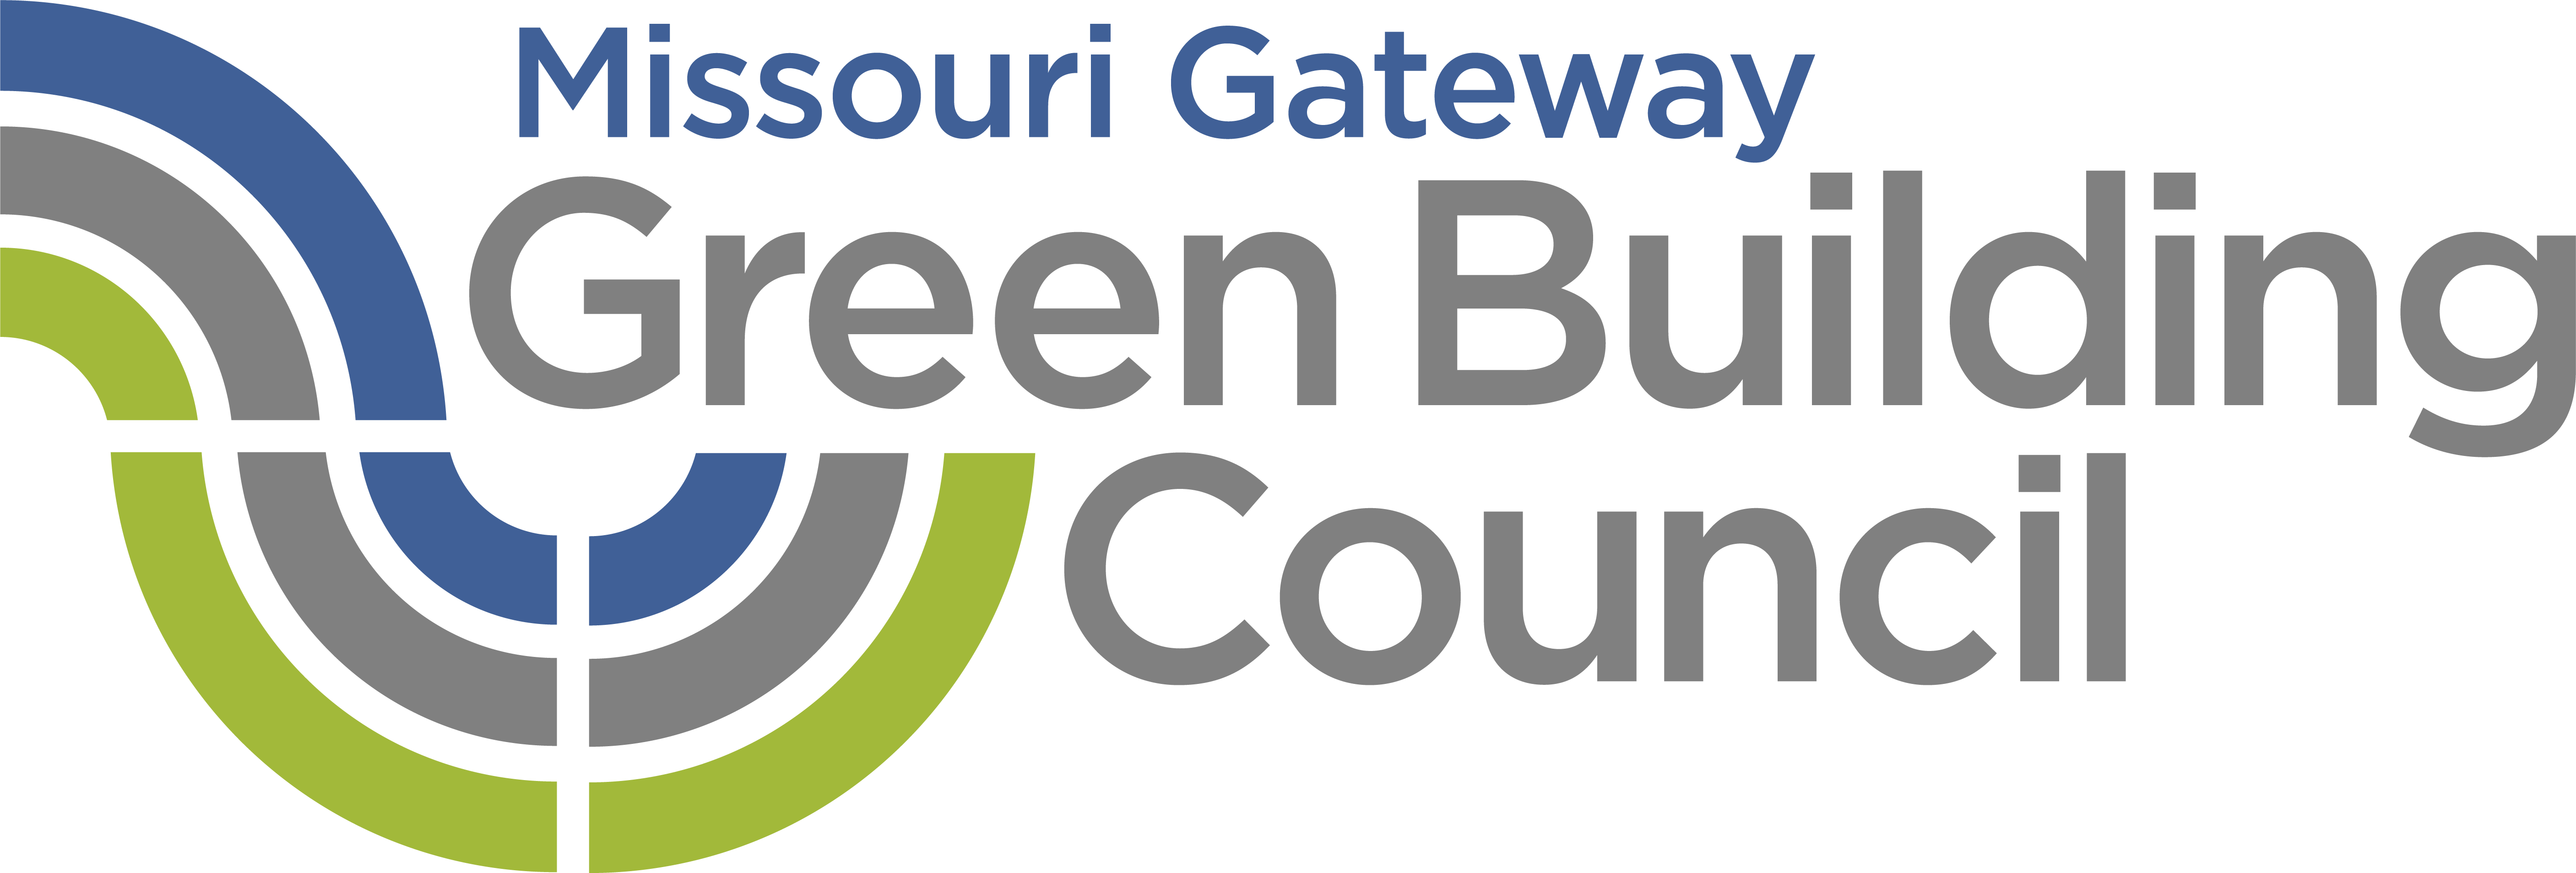 Missouri Gateway Green Building Council